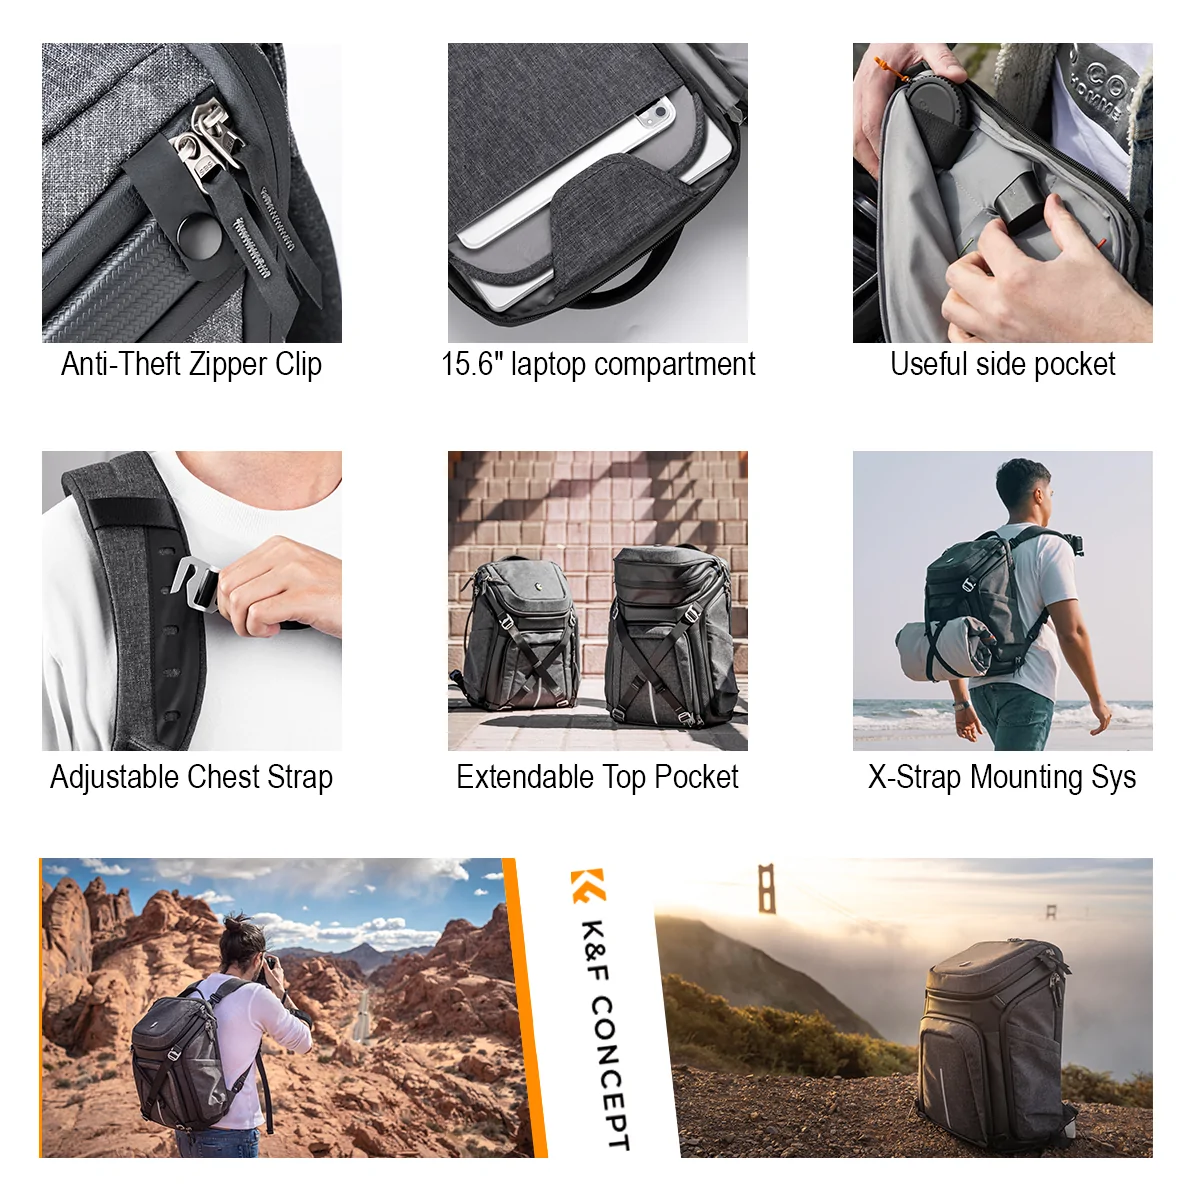 K&F Concept Exec-Shooter the Premium Choice in Camera Backpacks | KF13.105 Camera tek